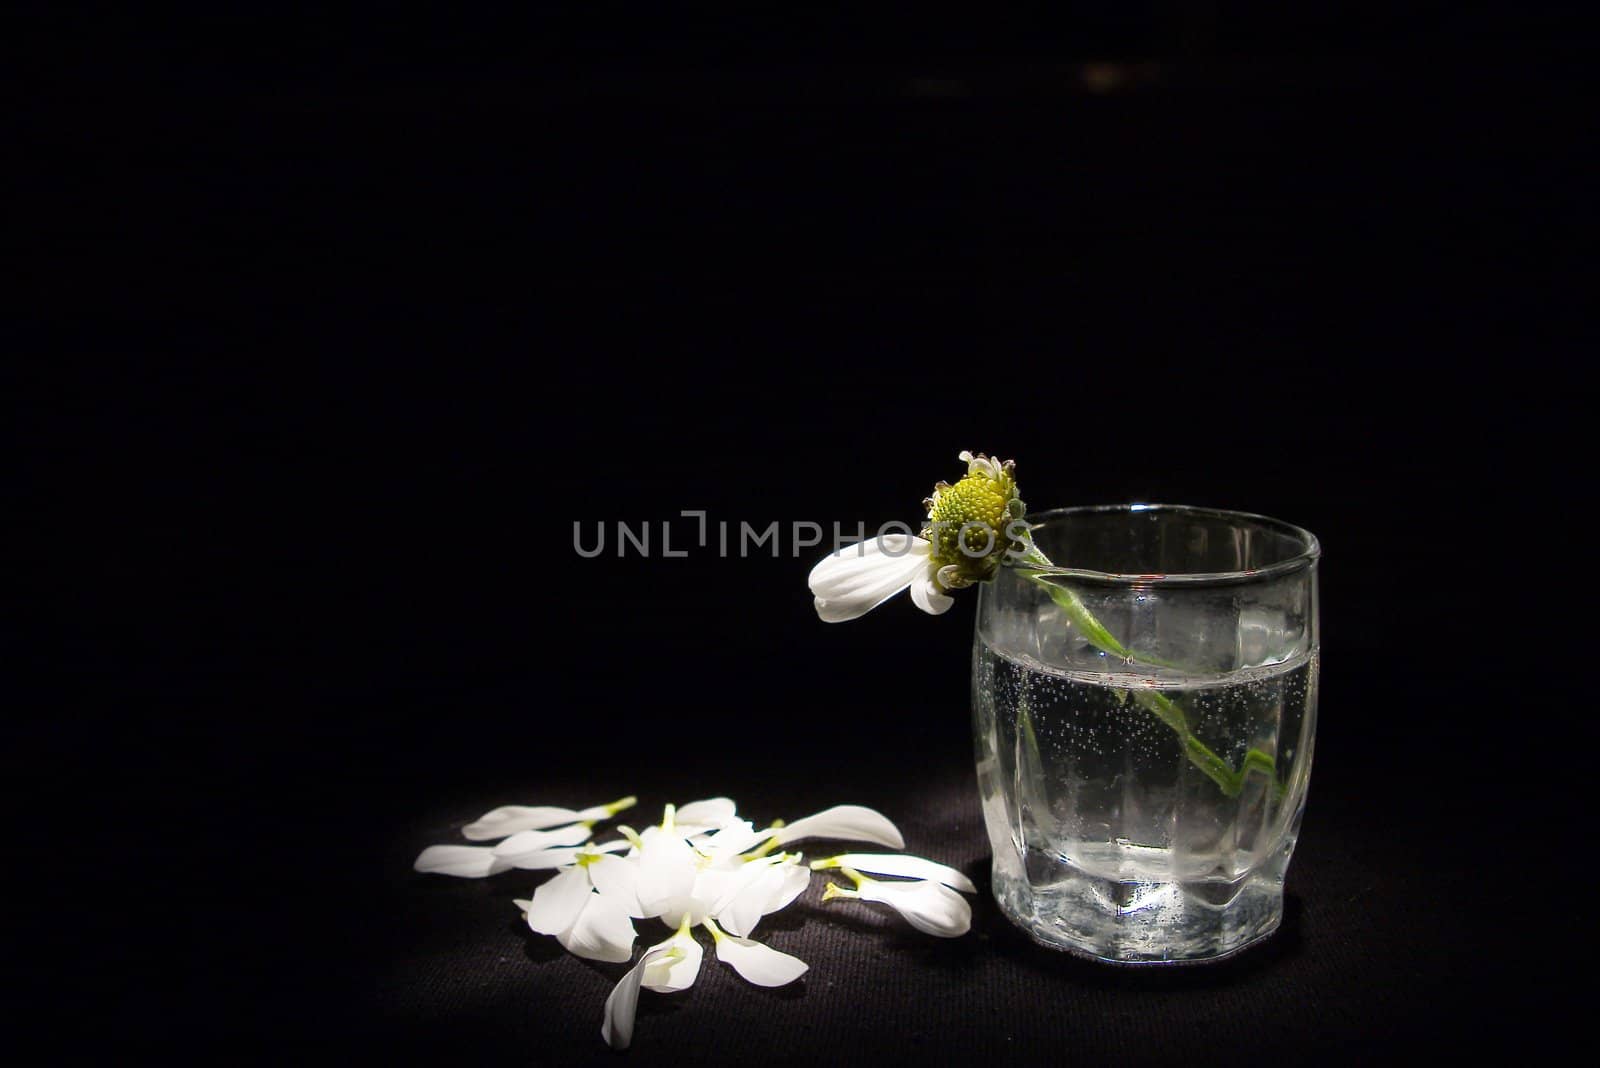 Alone chrysanthemum in the glass.